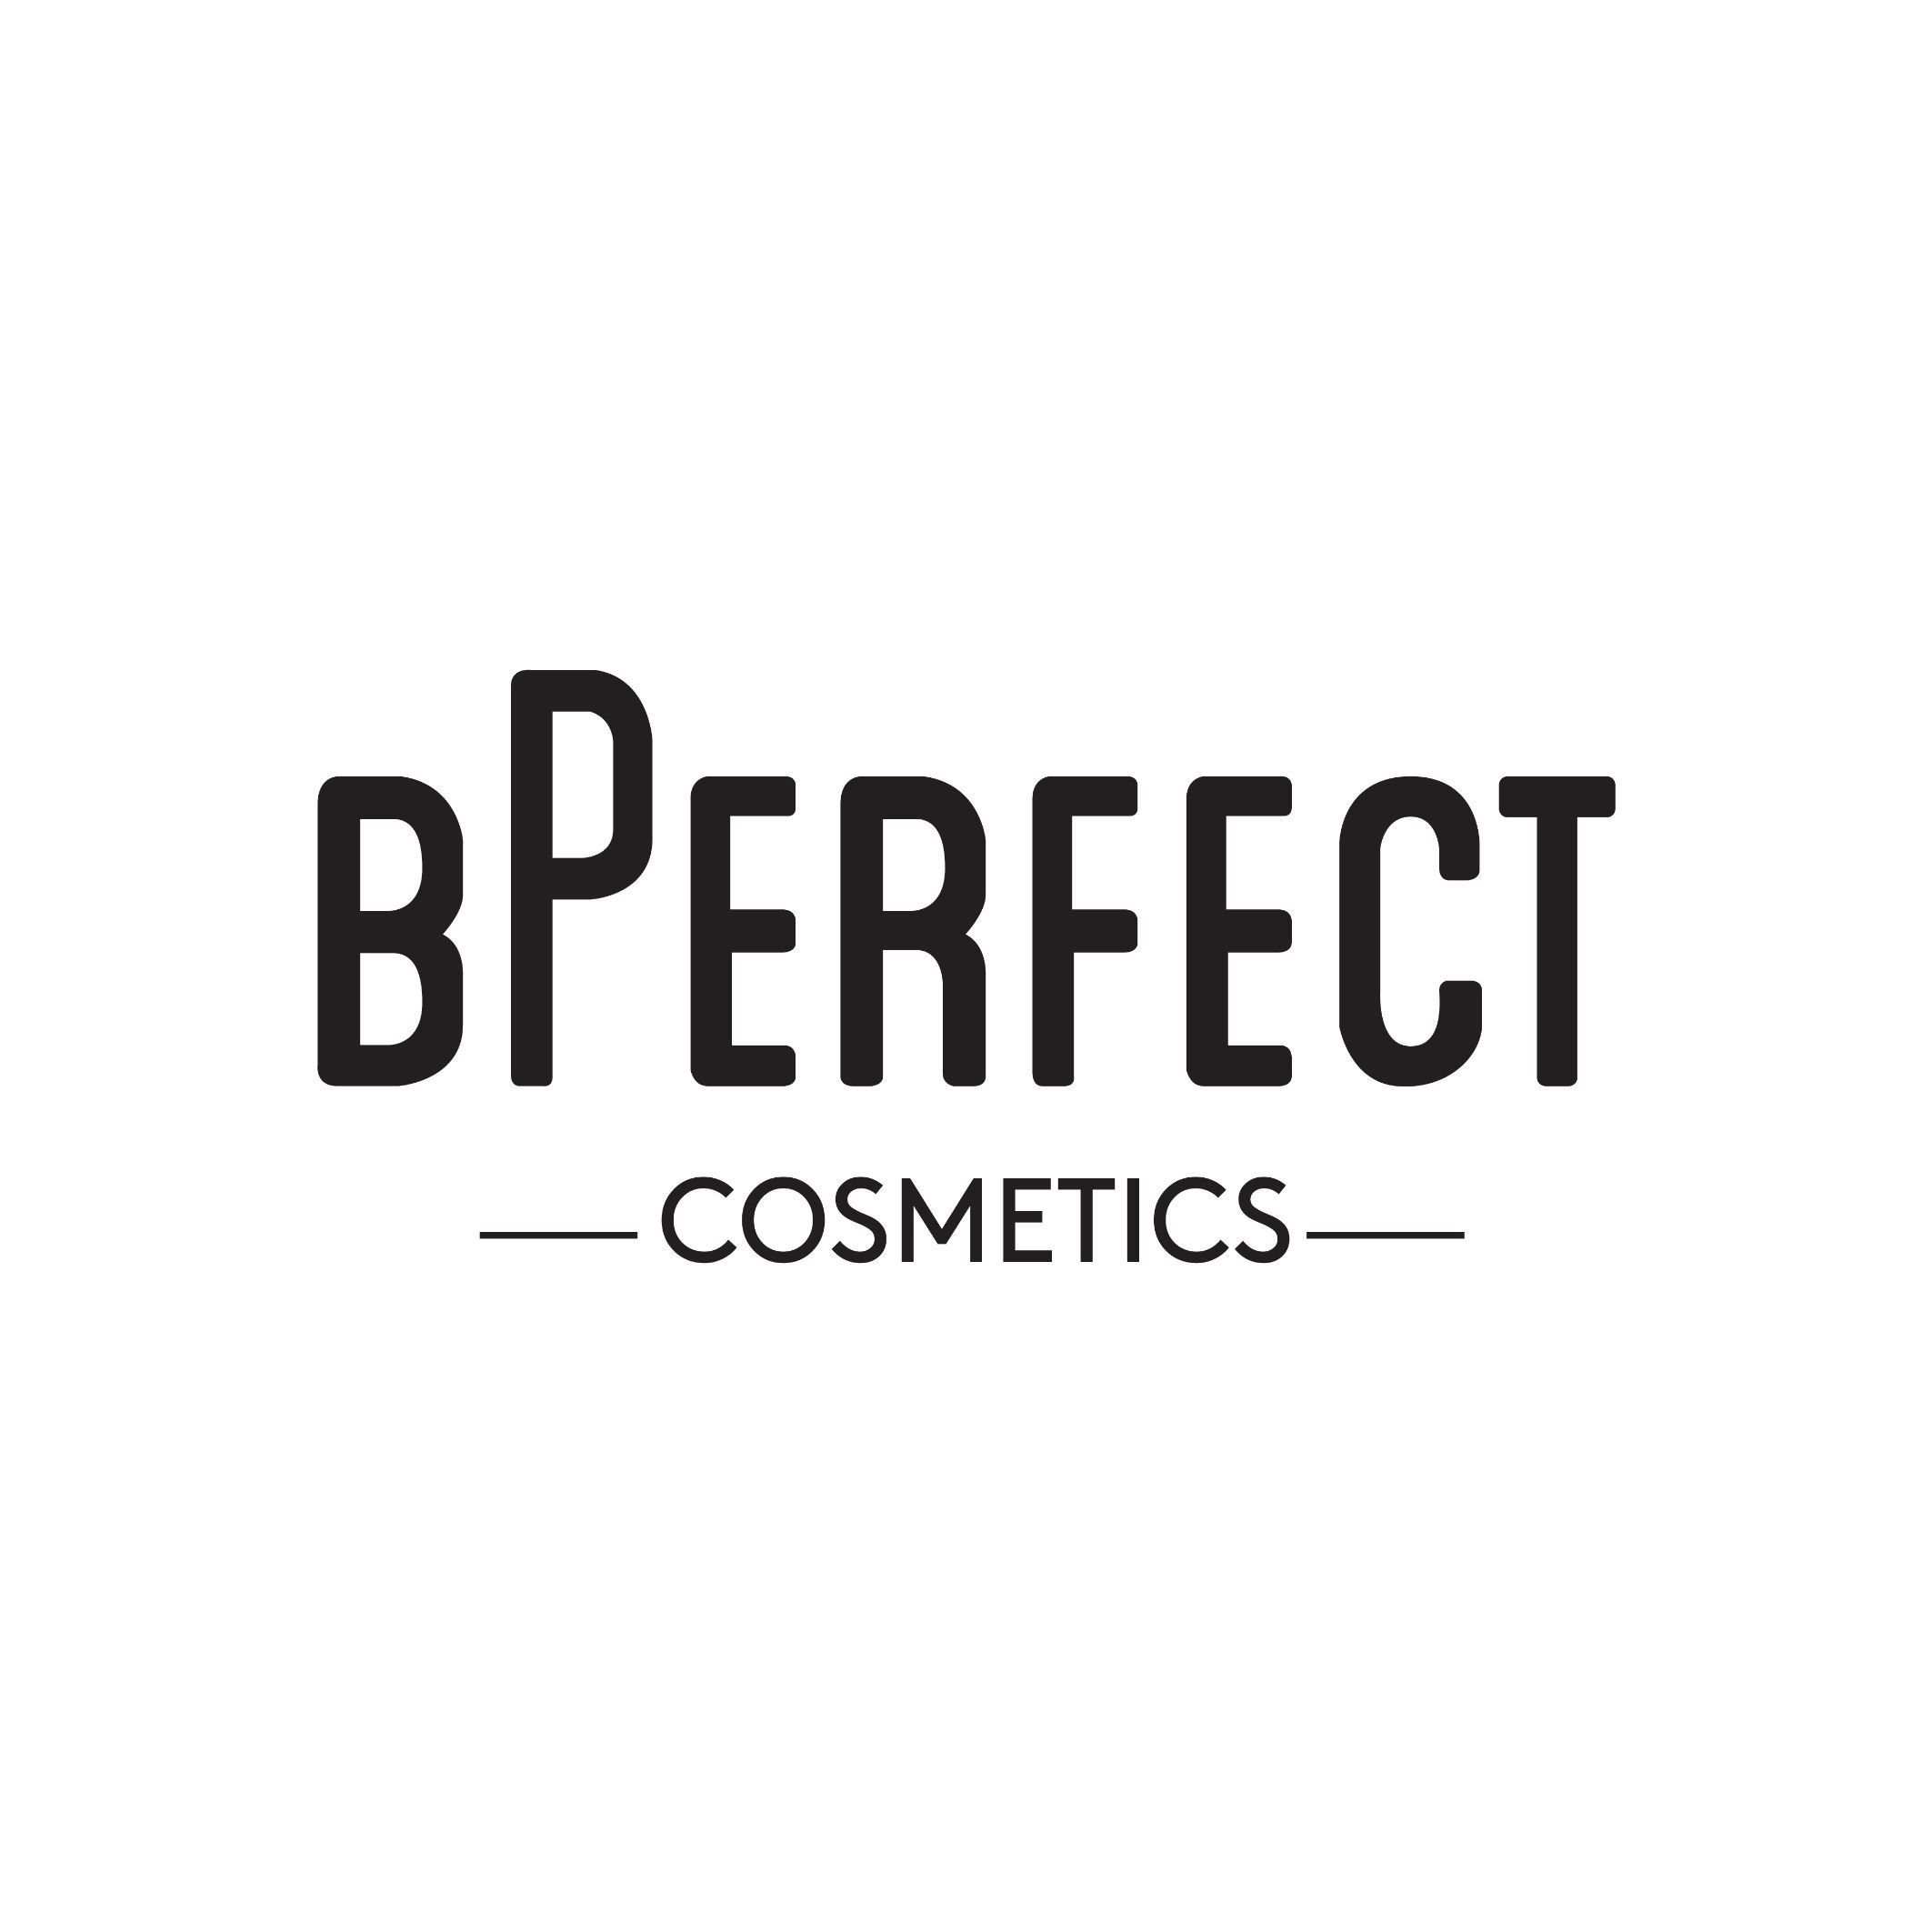 BPerfect Cosmetics Blanchardstown, Blanchardstown Shopping Centre, Dublin